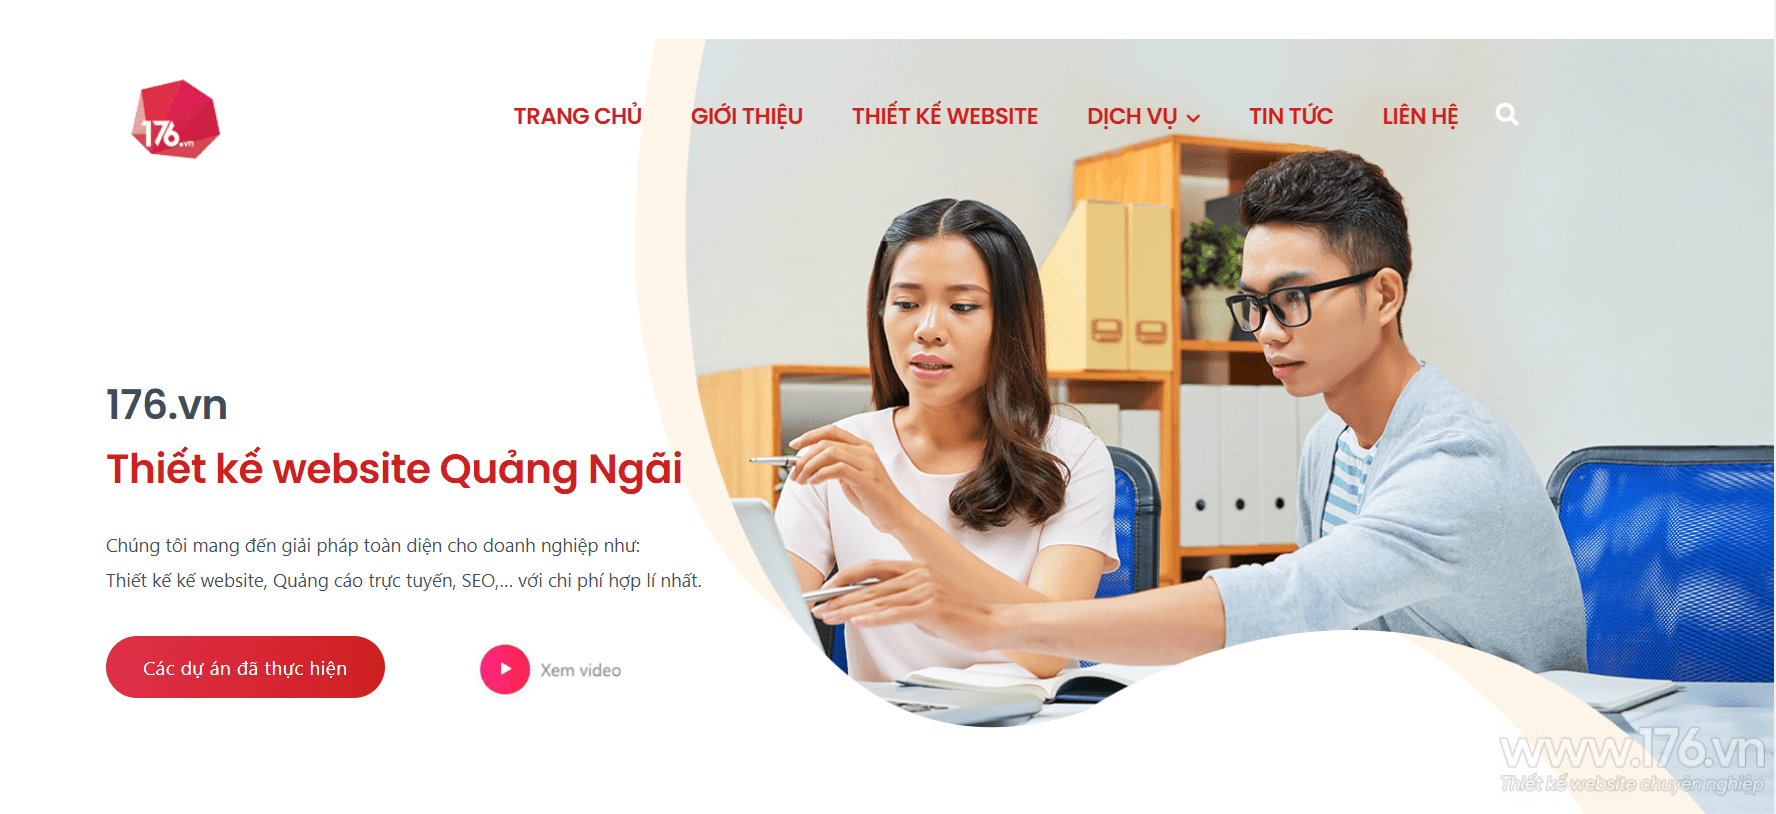 website van phong pham quang ngai